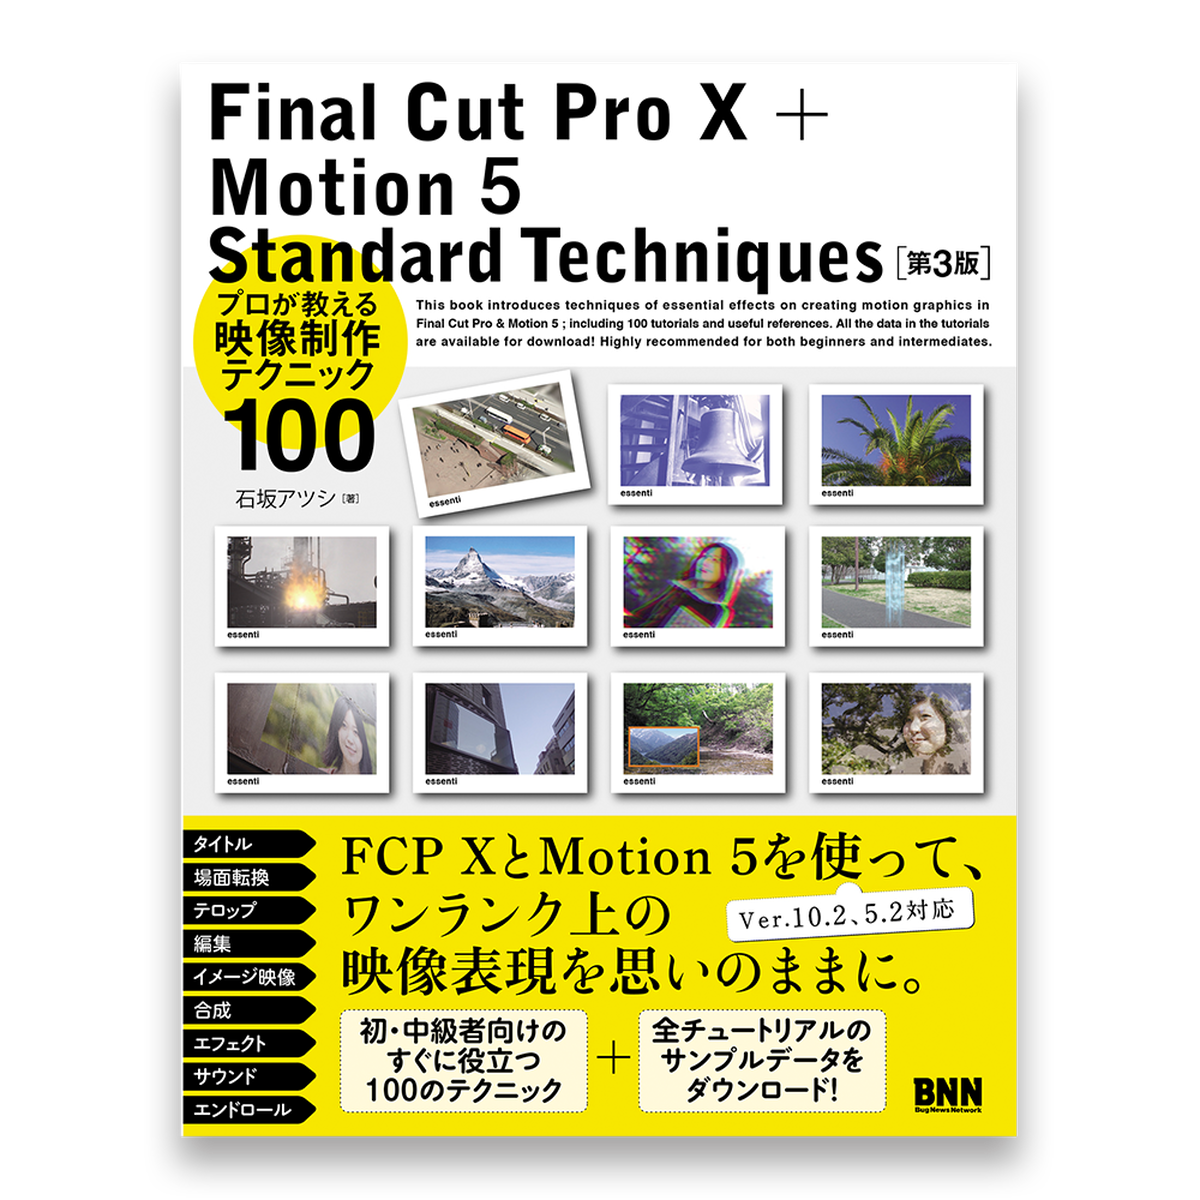 Final Cut Pro X Motion 5 Standard Techniques 第3版 プロが教える映像制作テクニック100 Bnnオンラインストア